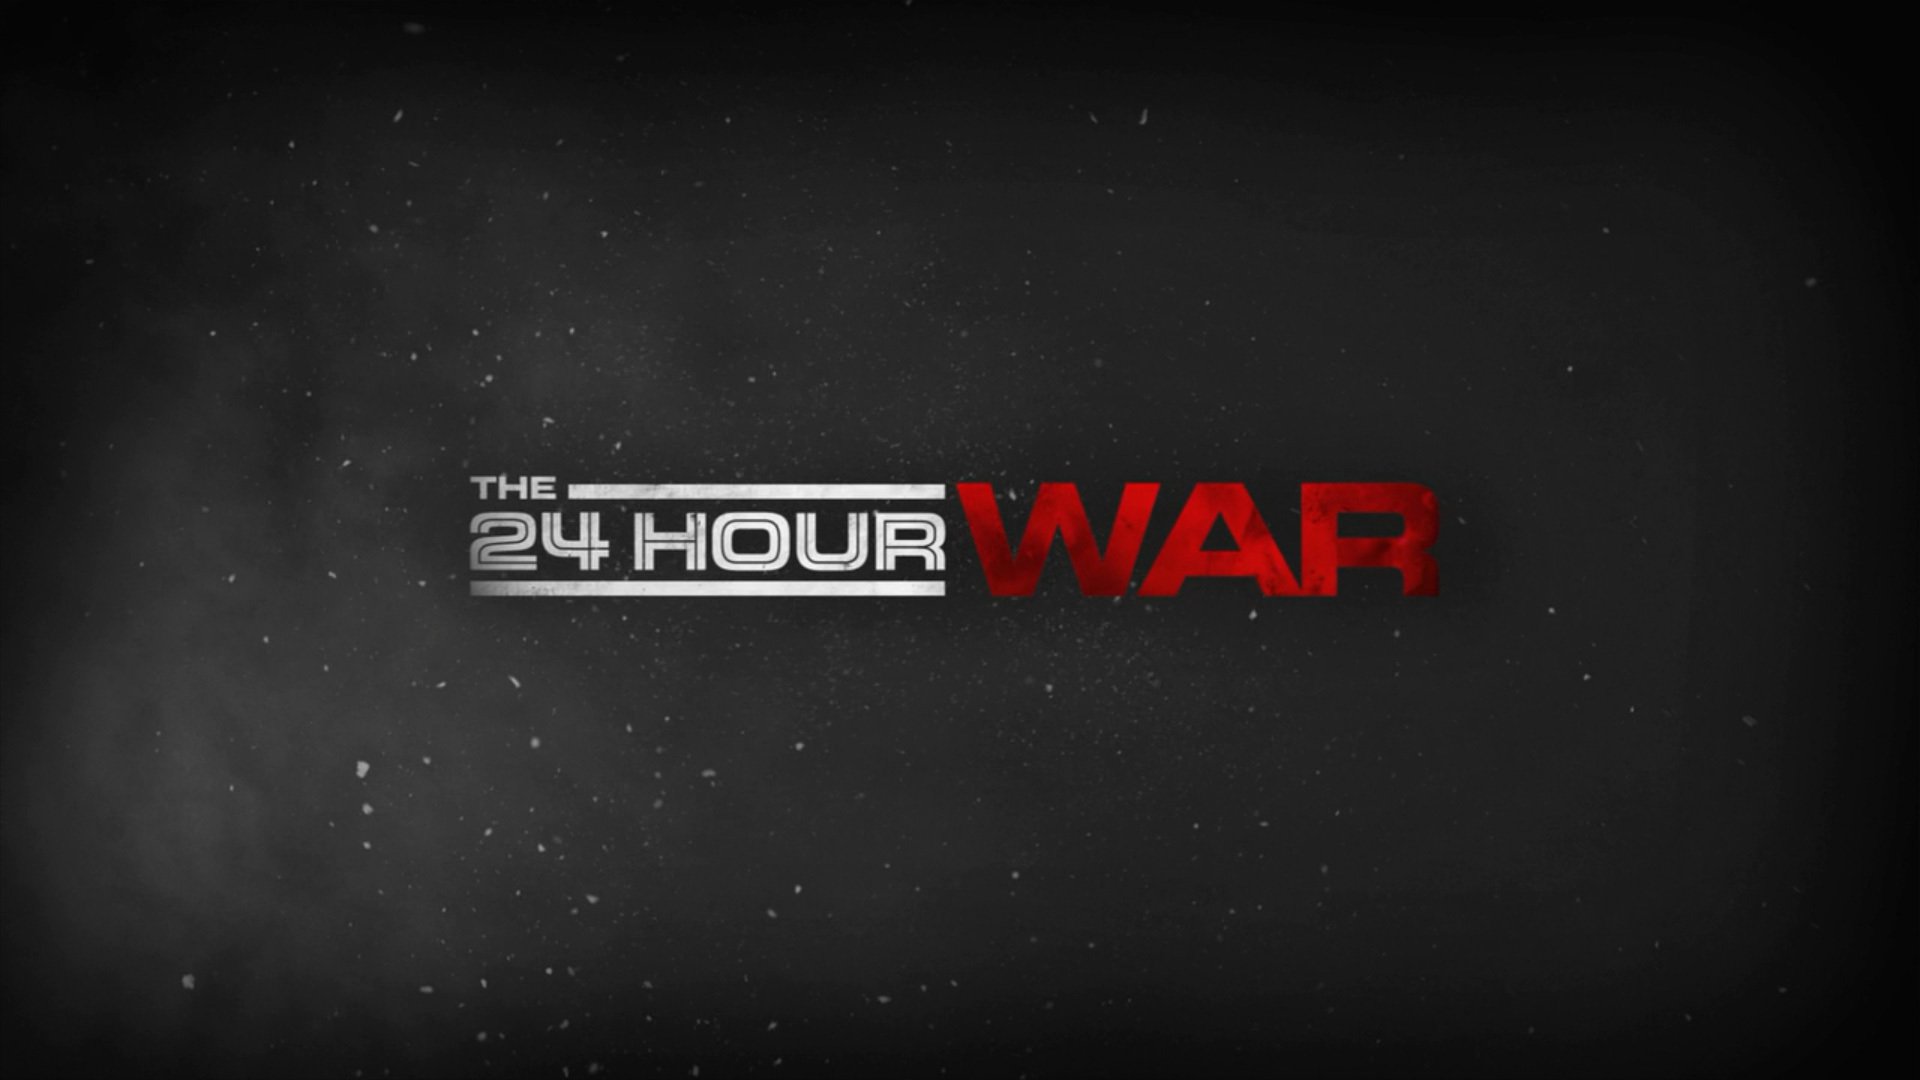 The 24 Hour War